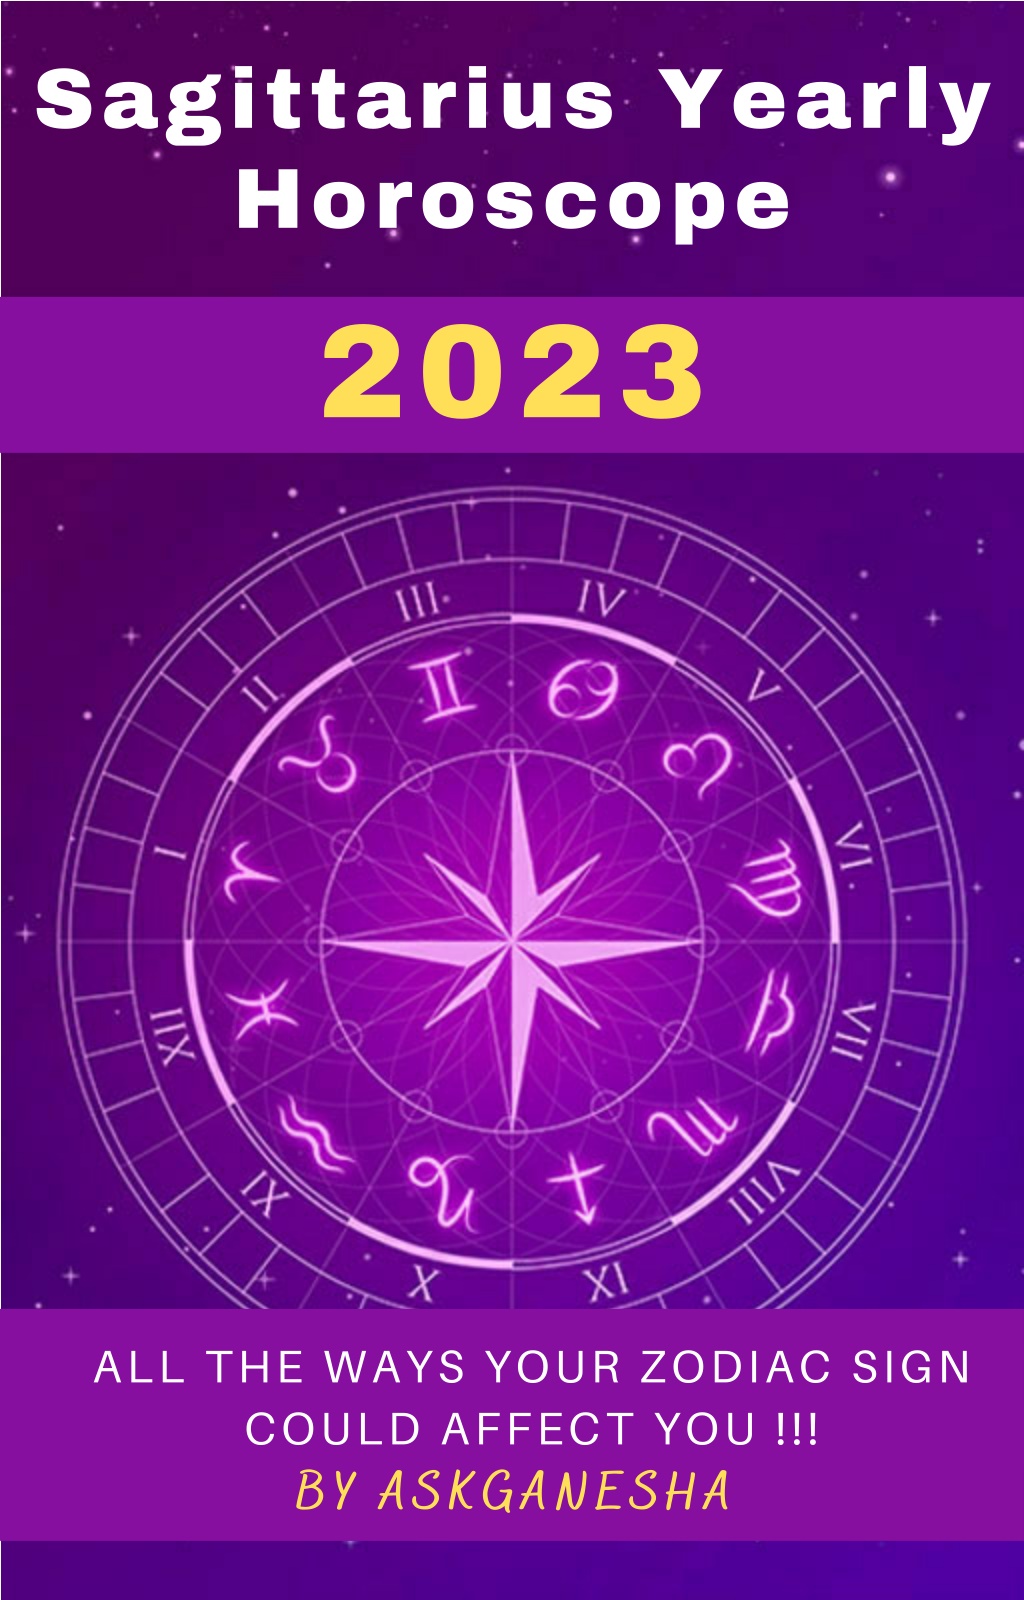 PPT Sagittarius Yearly Horoscope 2023 PowerPoint Presentation, free